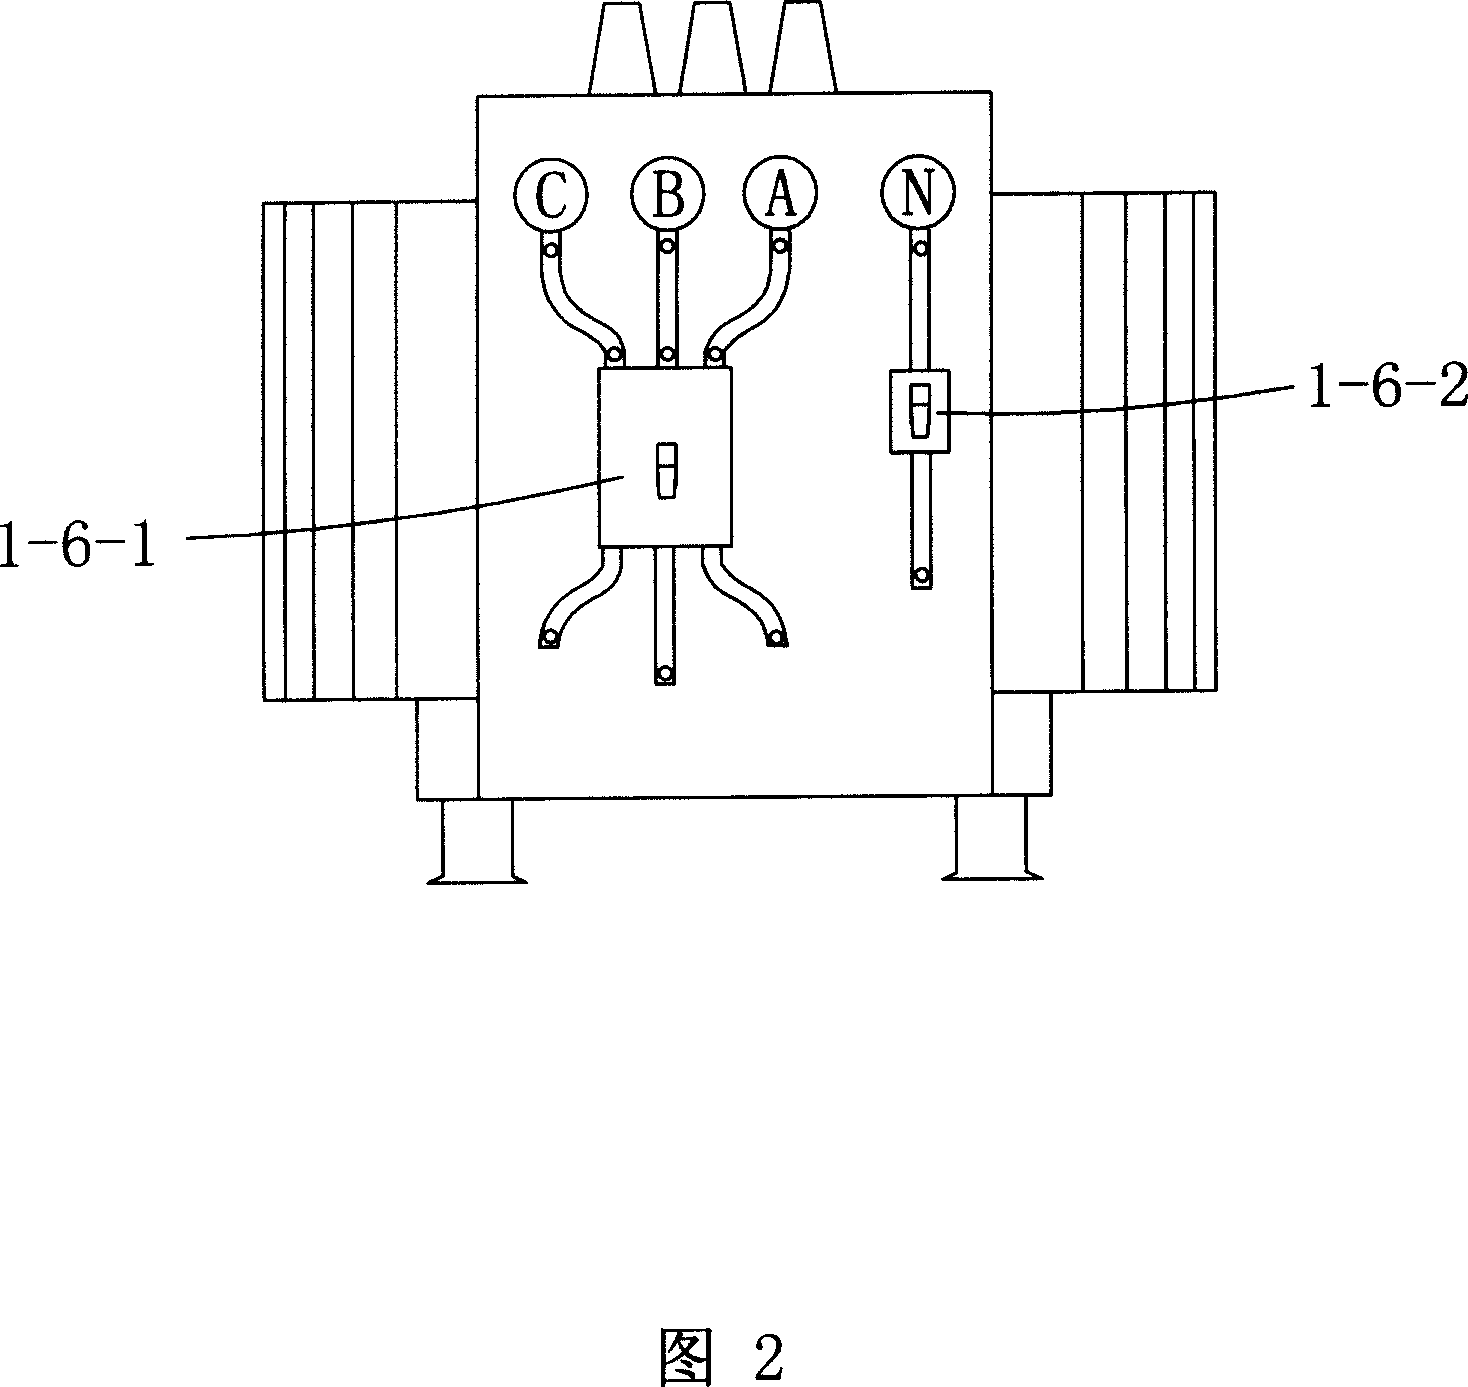 Method for replacing 10kV distributing transformer with charge